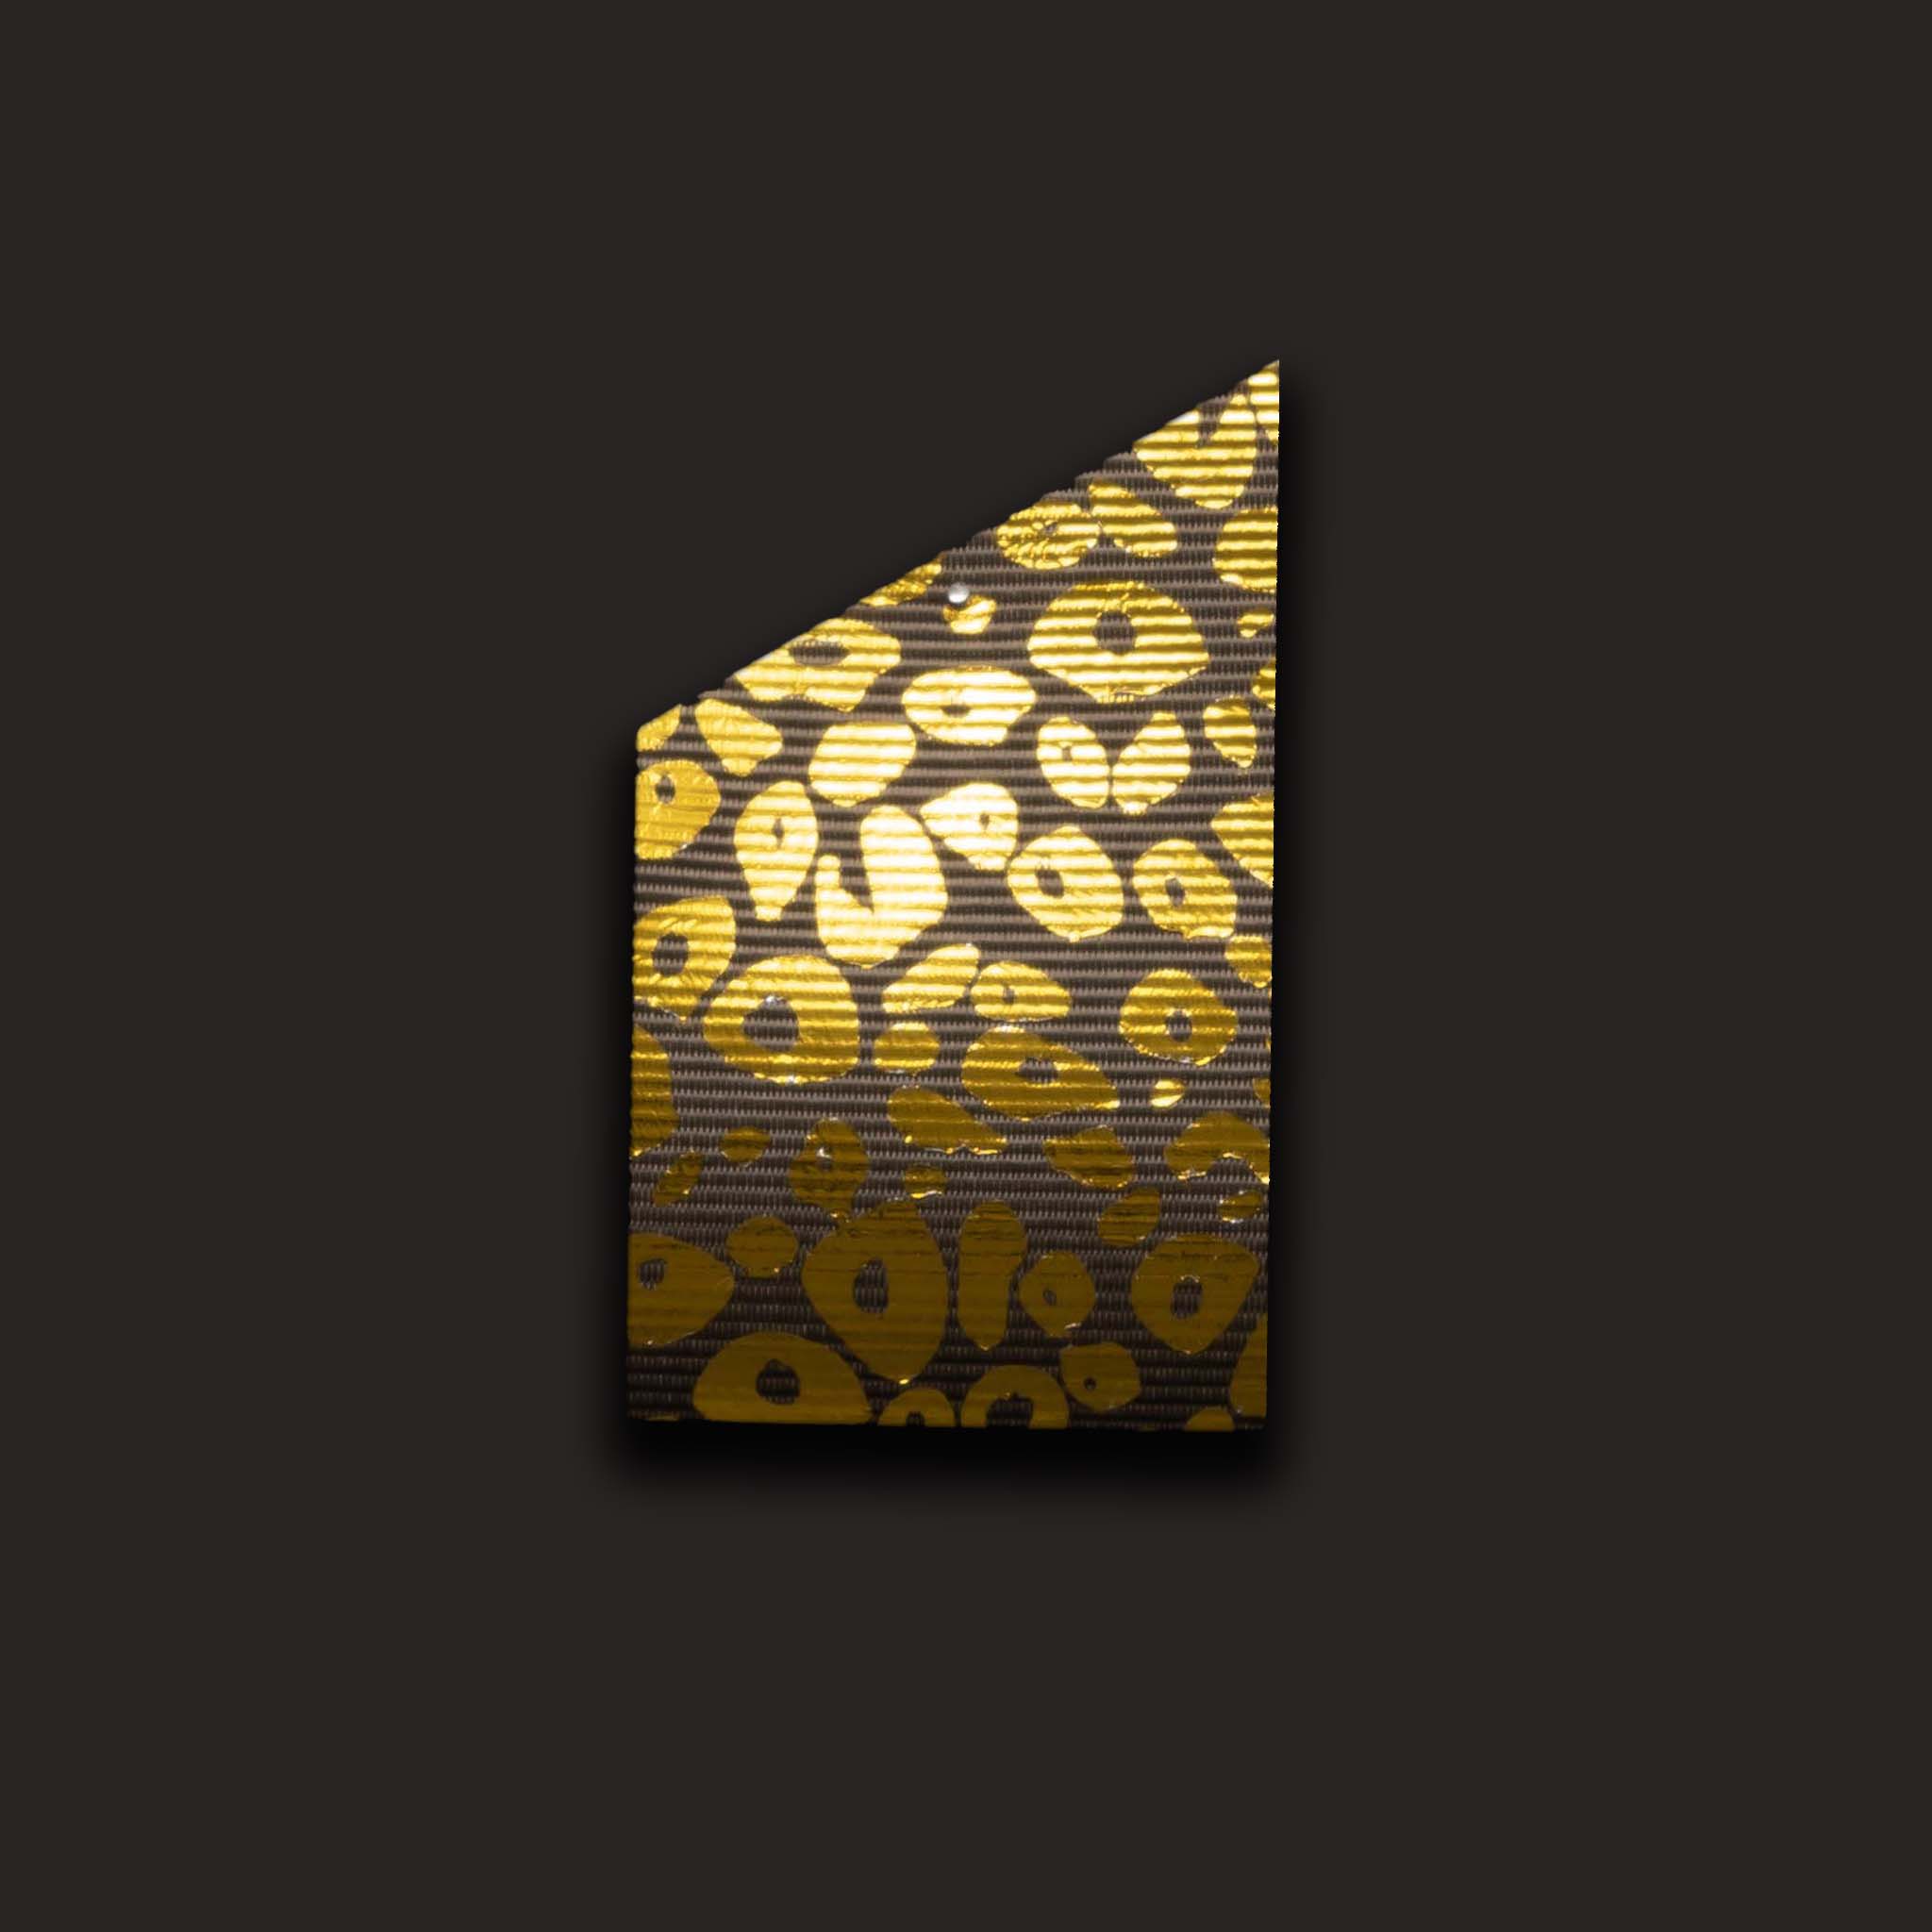 1.5 Metallic Ribbon: Gold (10 Yards) RG0139908